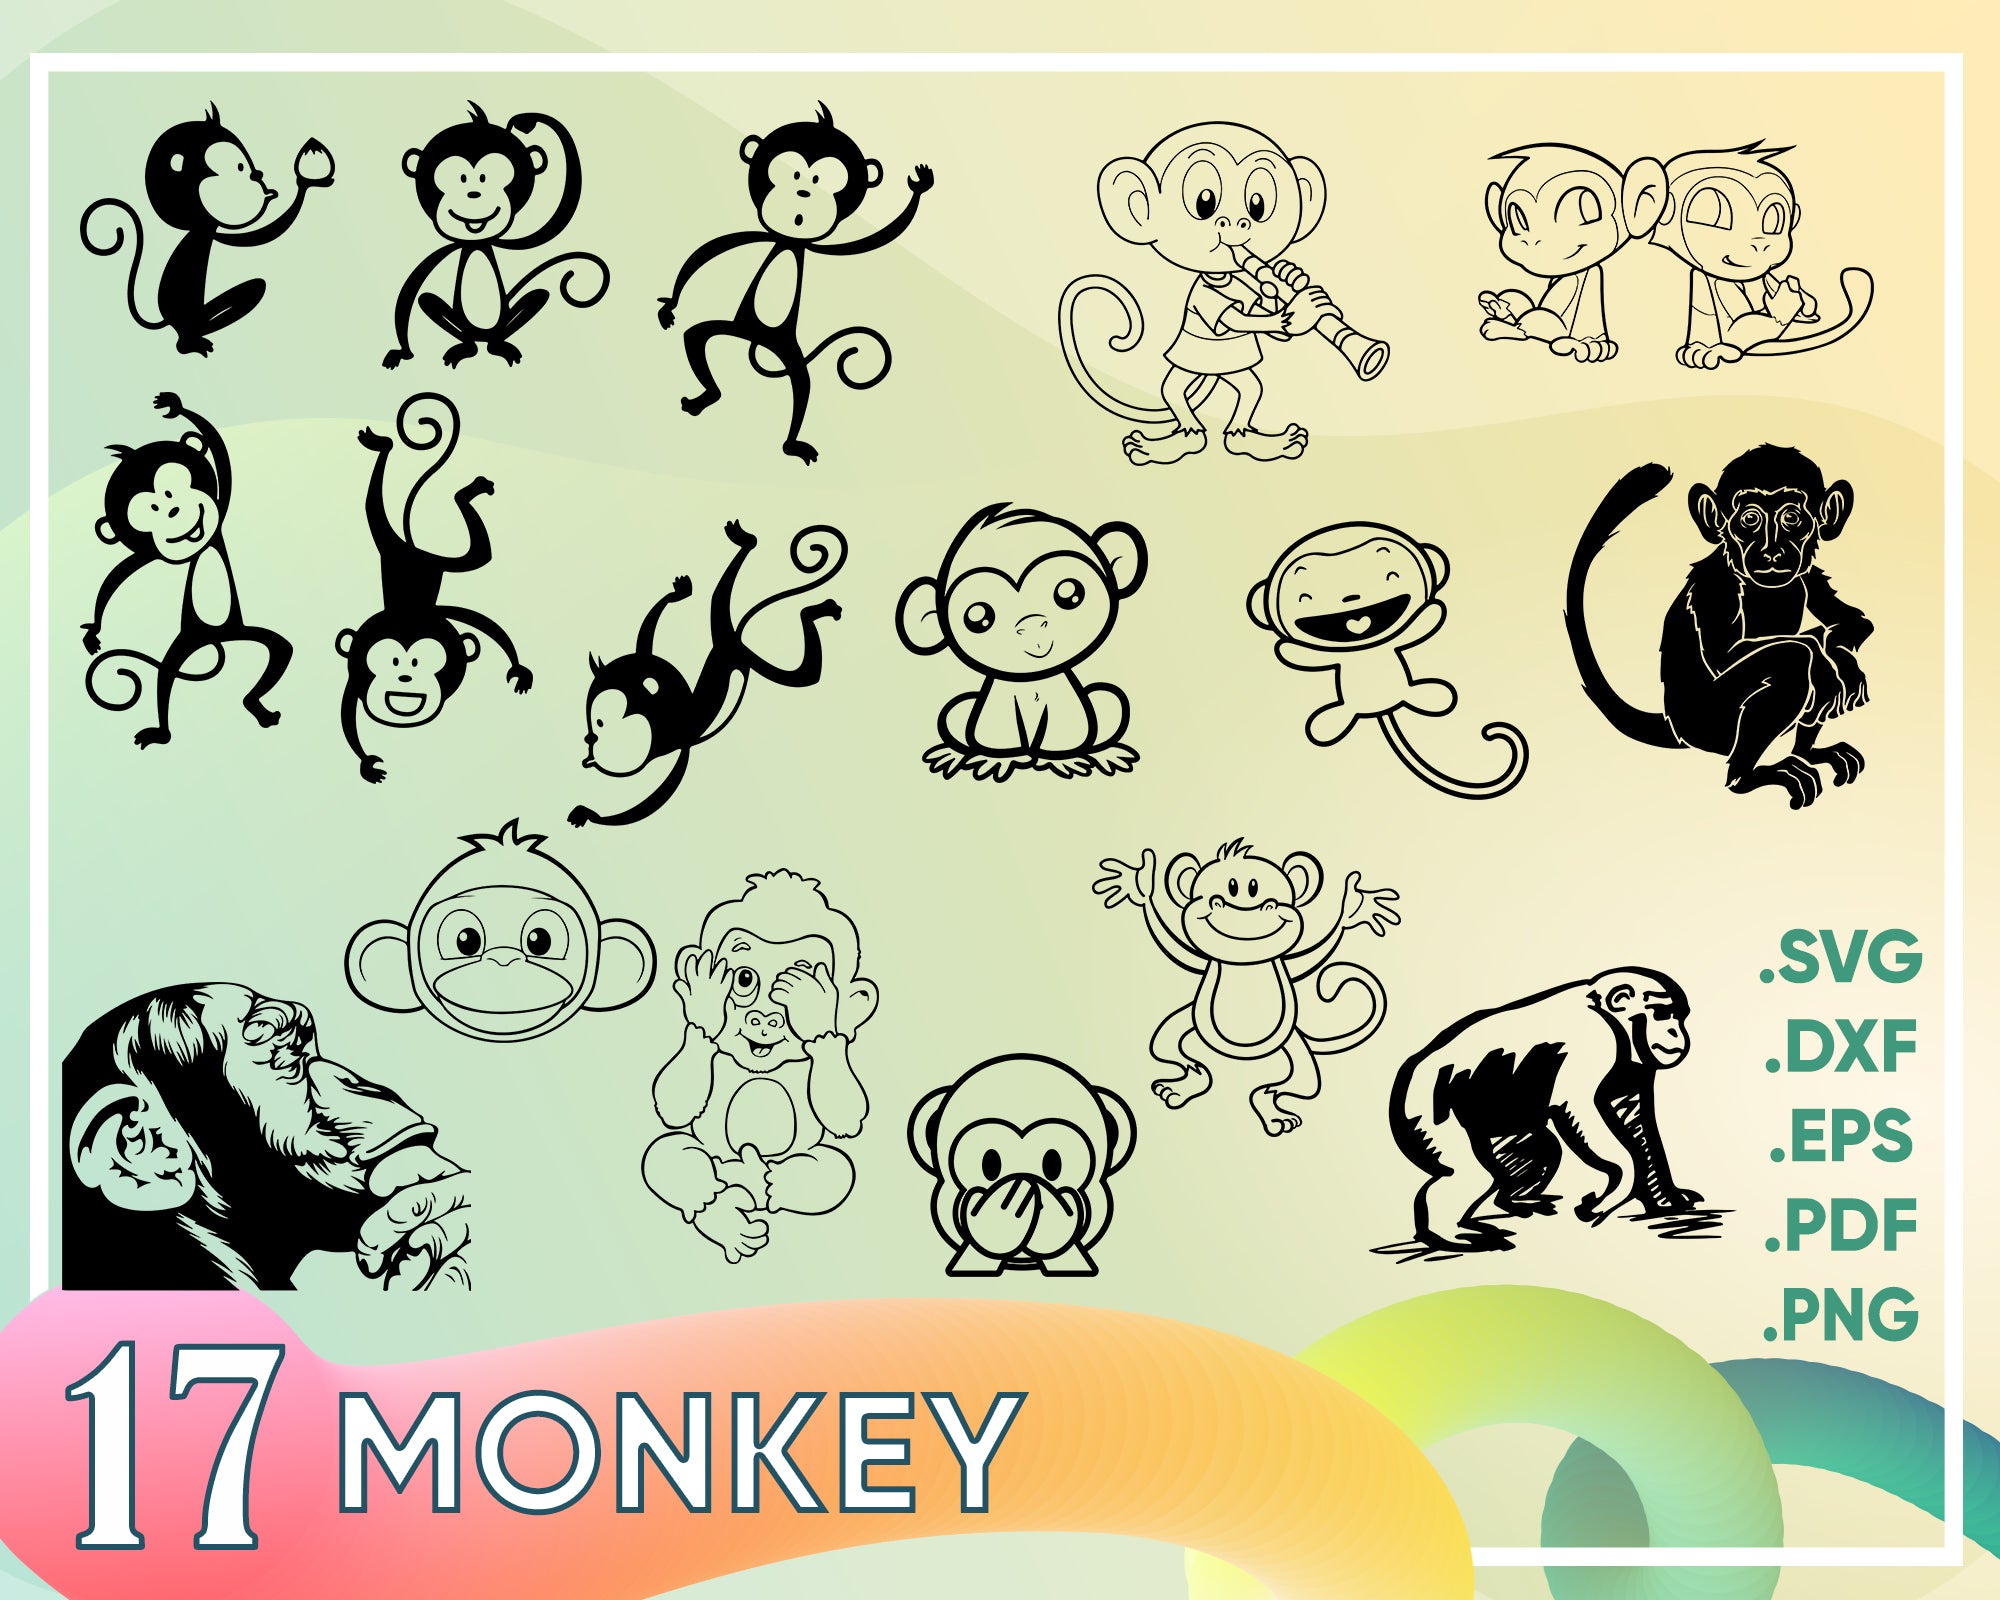 Download Clip Art Monkey Dxf Clipart Monkey Vinyl Cut File Monkey Cricut Cut Files Monkey Cutting Files Monkey Silhouette Svg Monkey Svg Cutting Image Art Collectibles